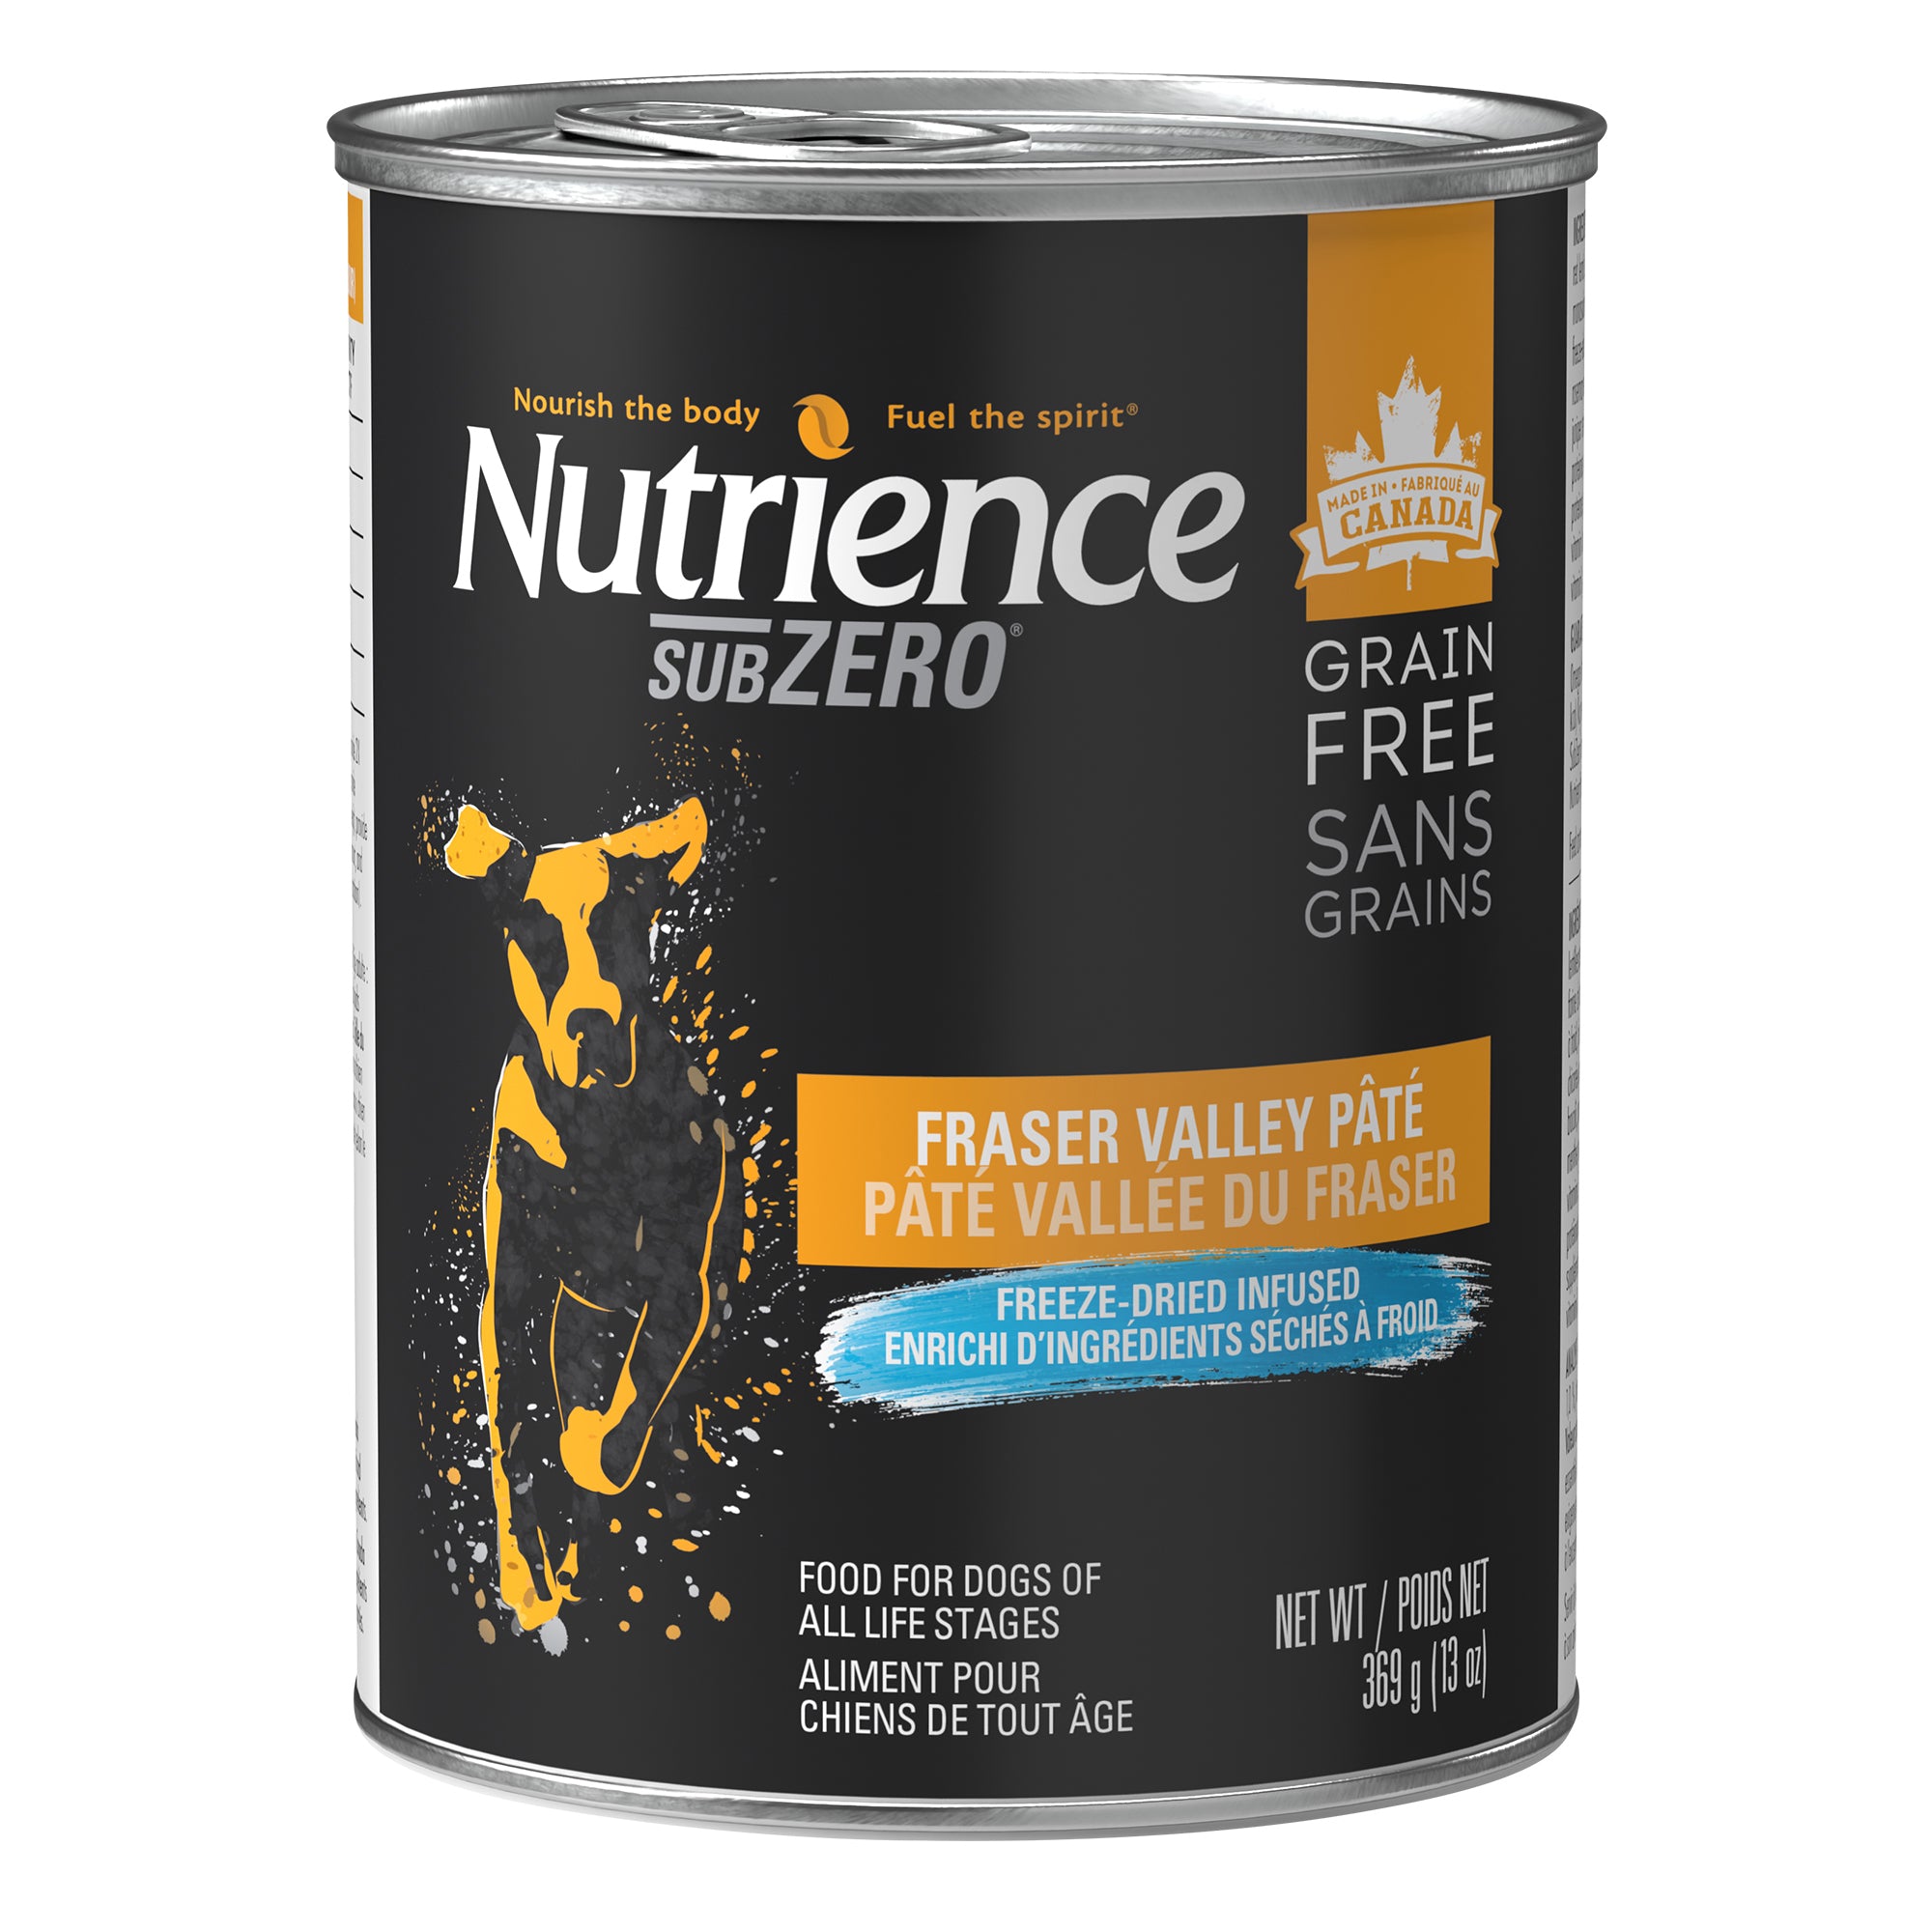 Nutrience Grain Free Subzero Pâté - Fraser Valley - 369 g (13 oz)